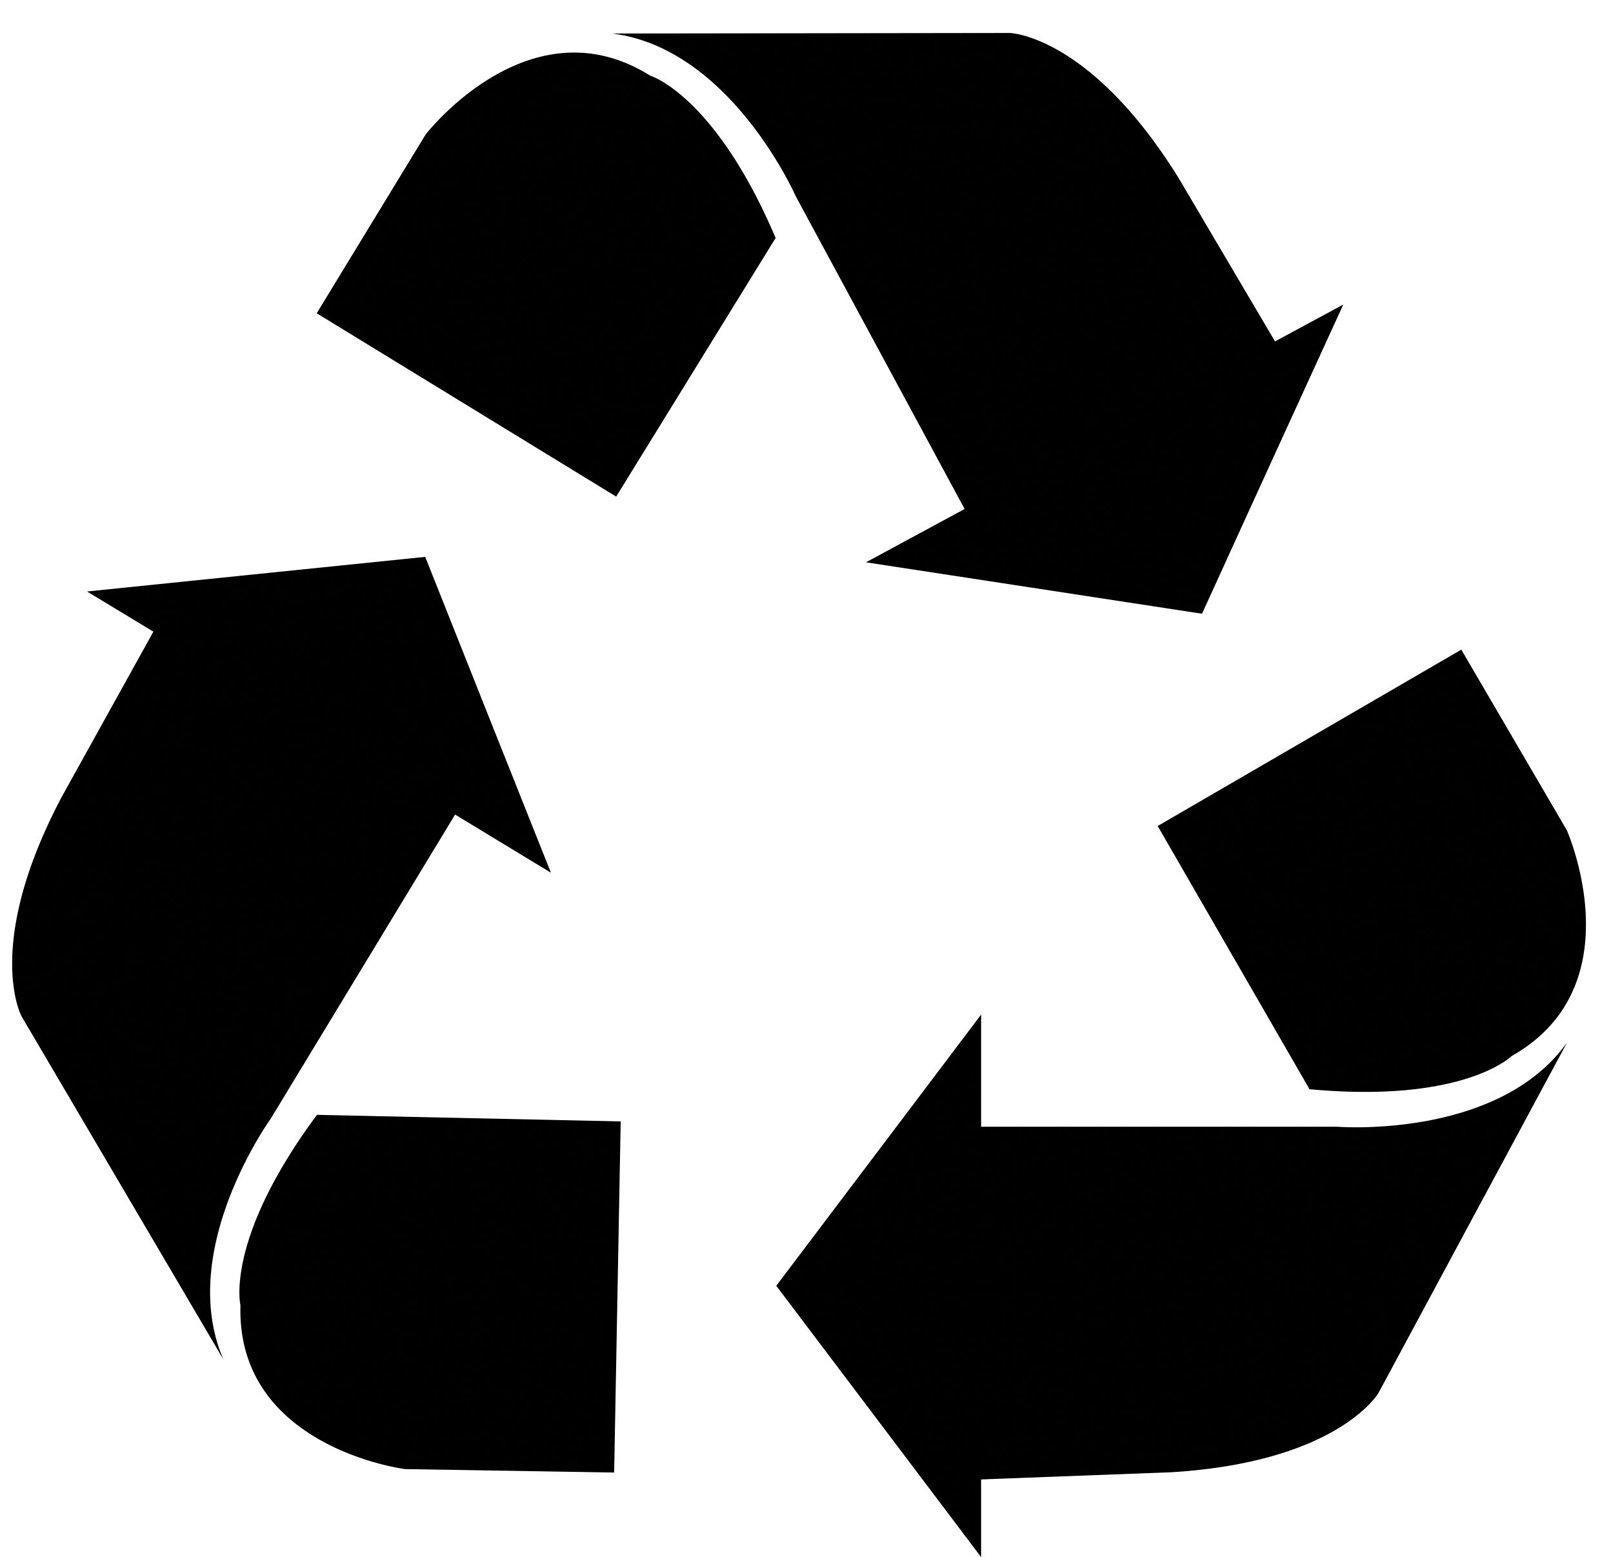 recycling logo ideas 4